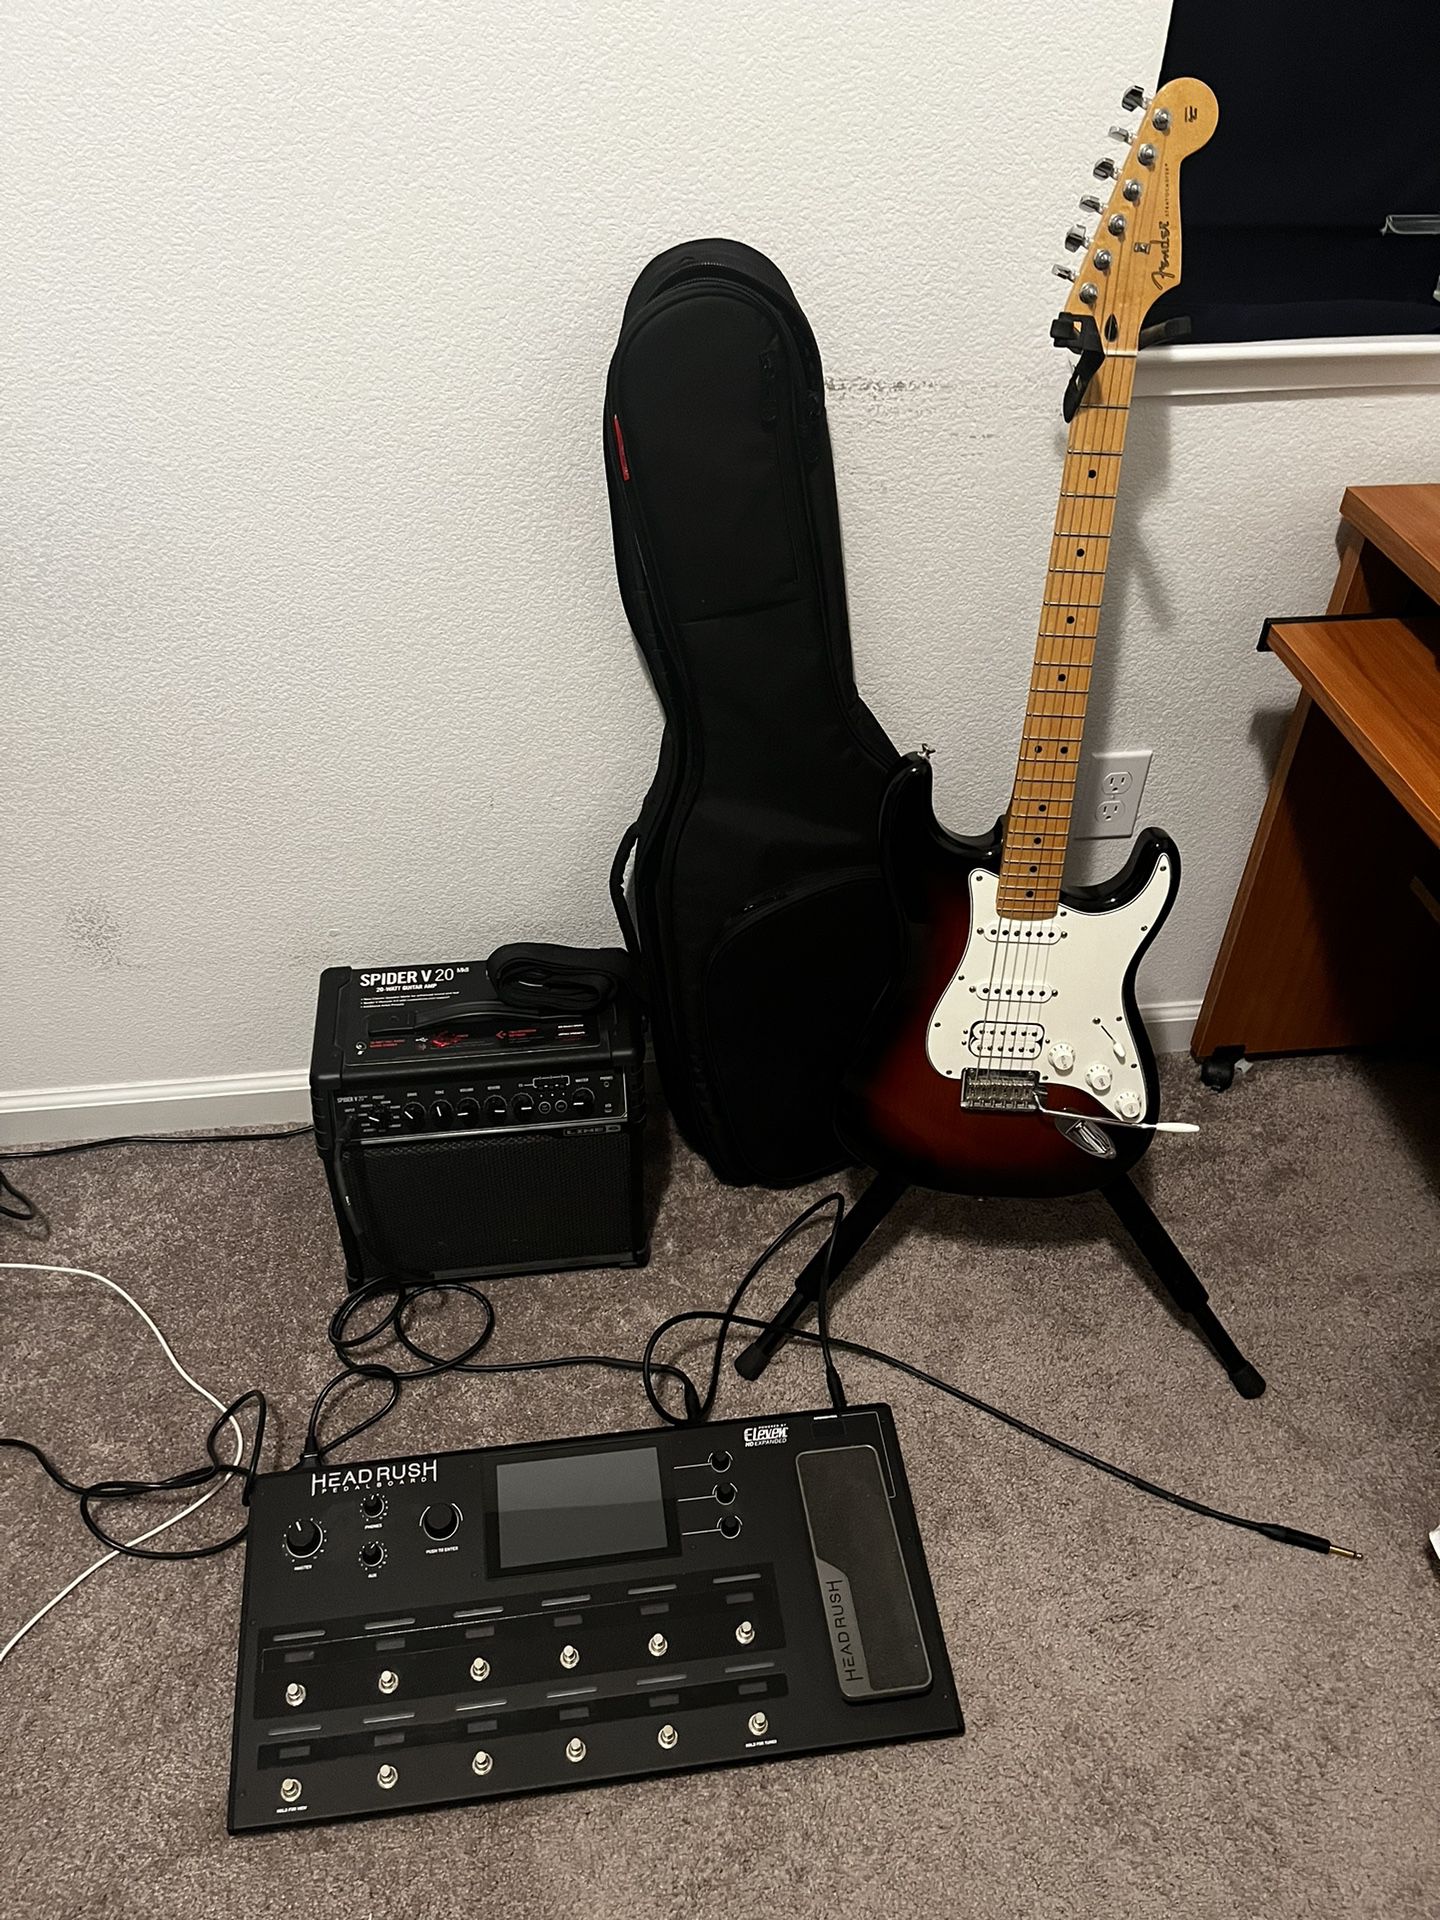 2018 Fender Stratocaster, Headrush FX Pedal Board